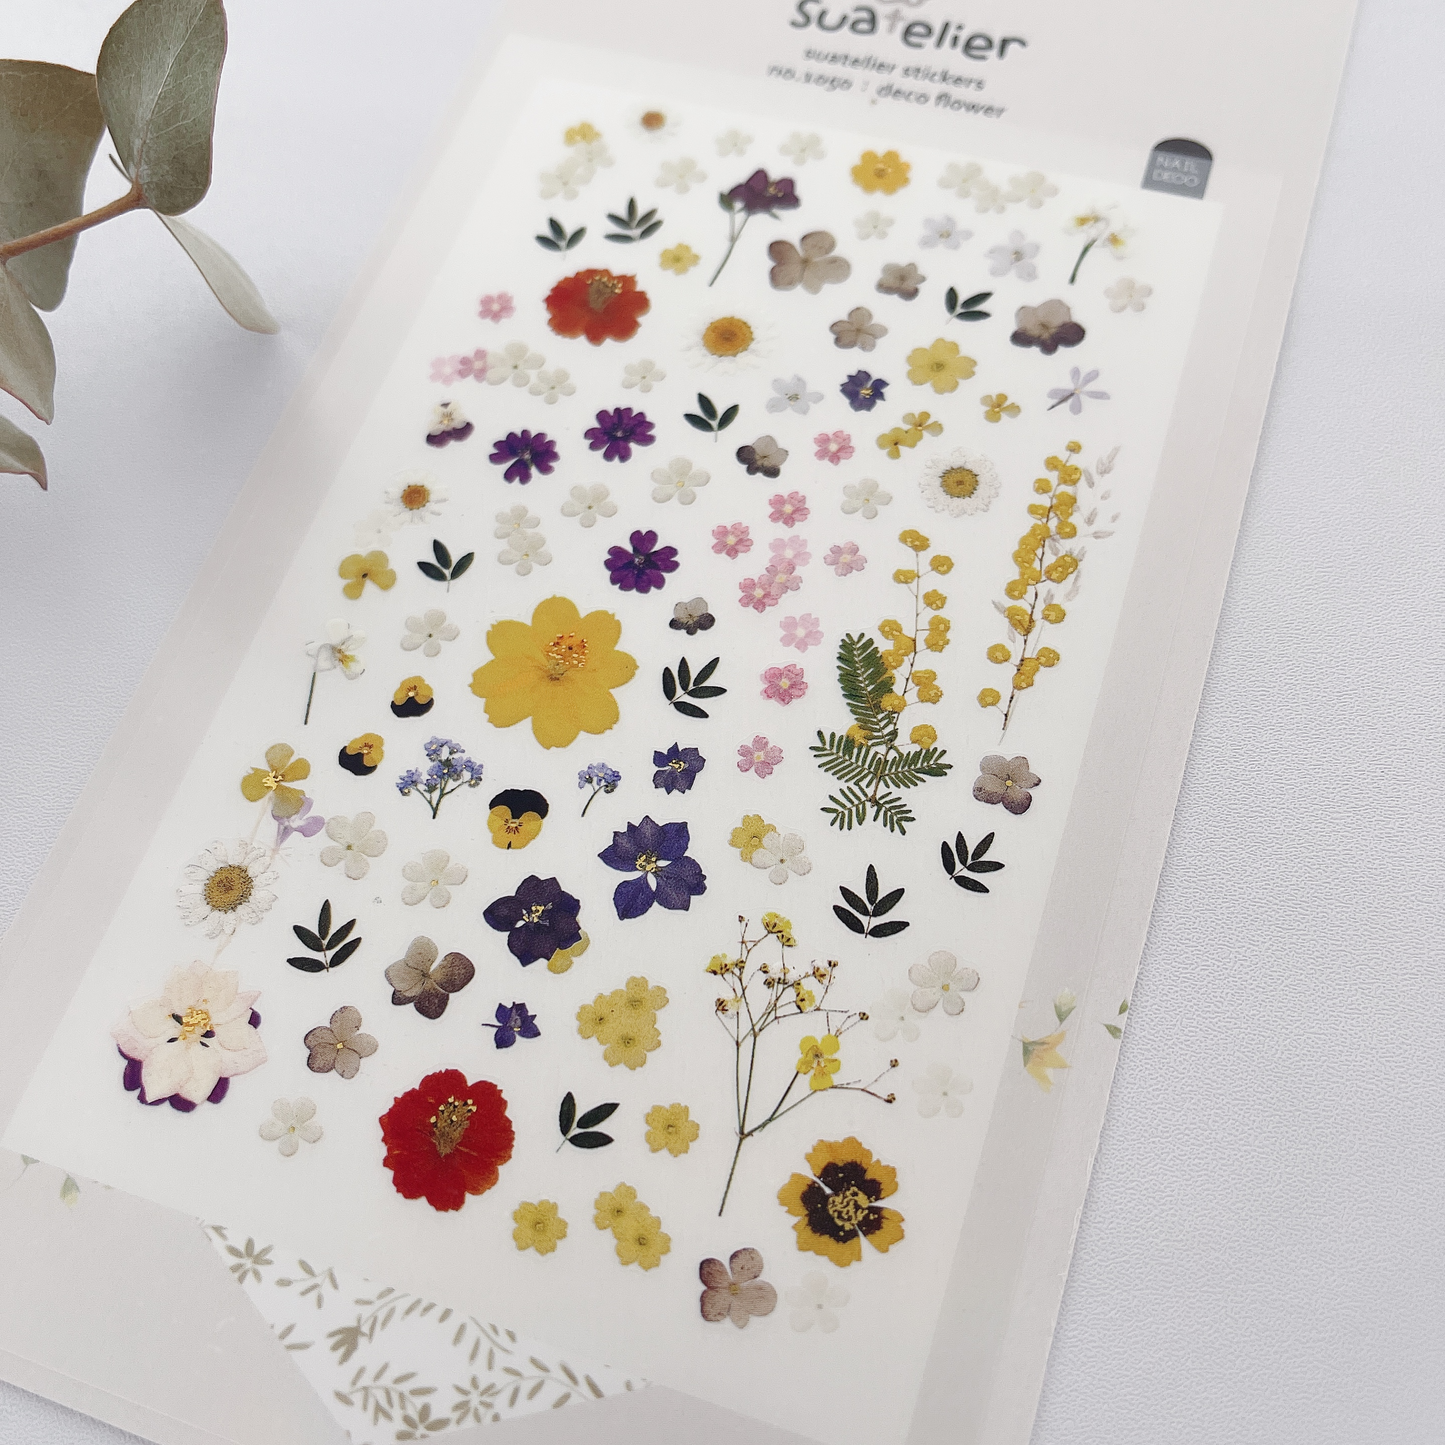 Suatelier Deco Flower Sticker // no. 1050